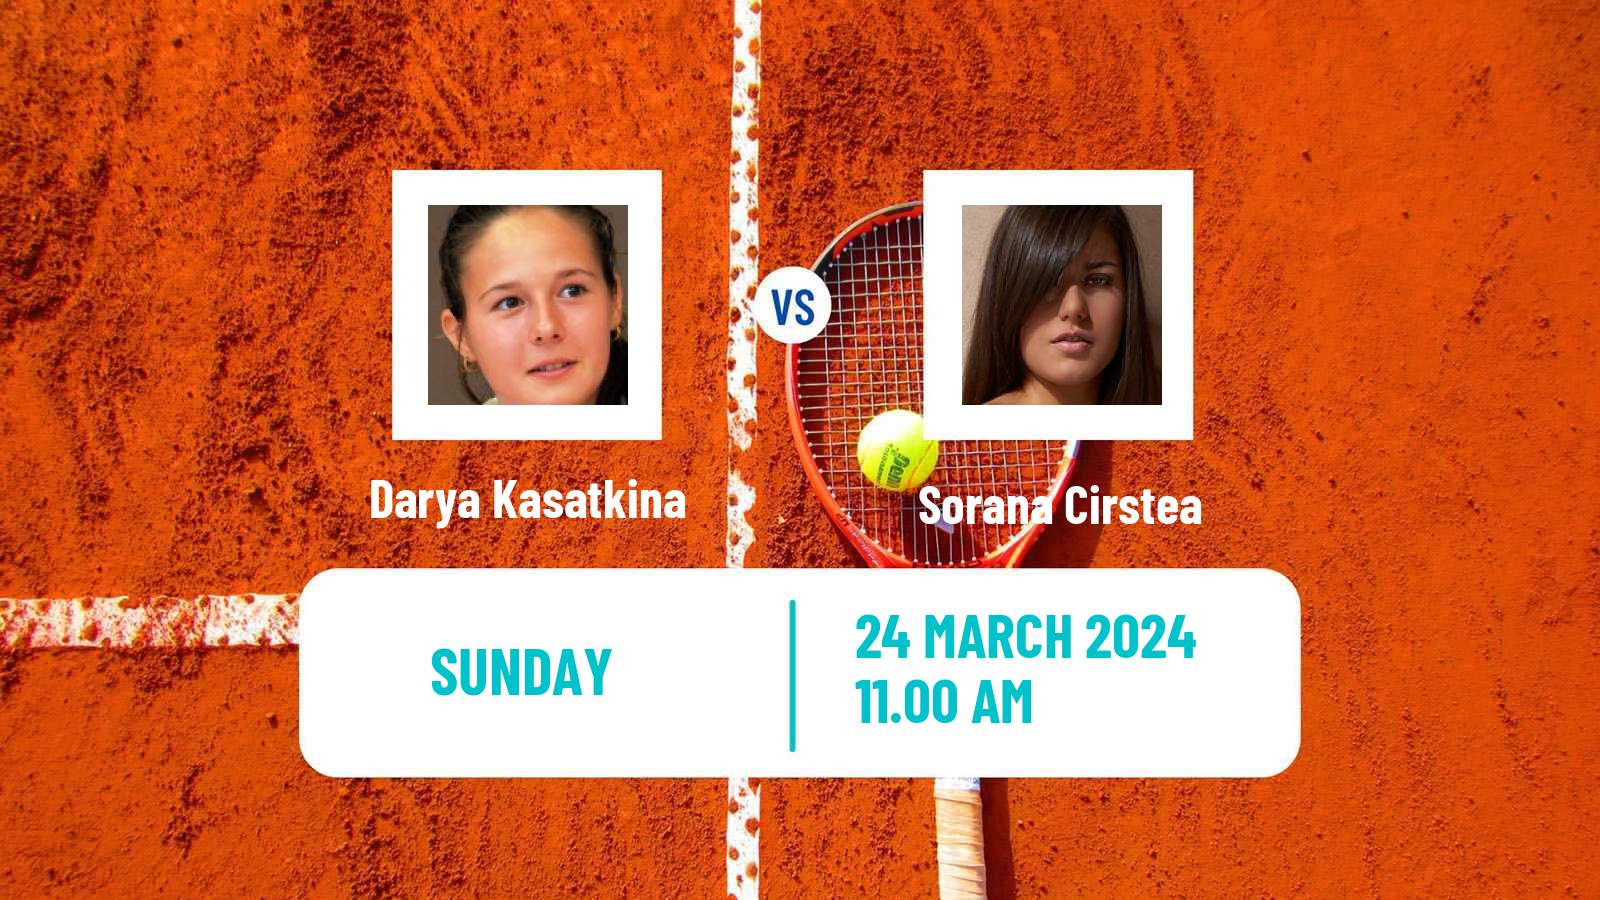 Tennis WTA Miami Darya Kasatkina - Sorana Cirstea